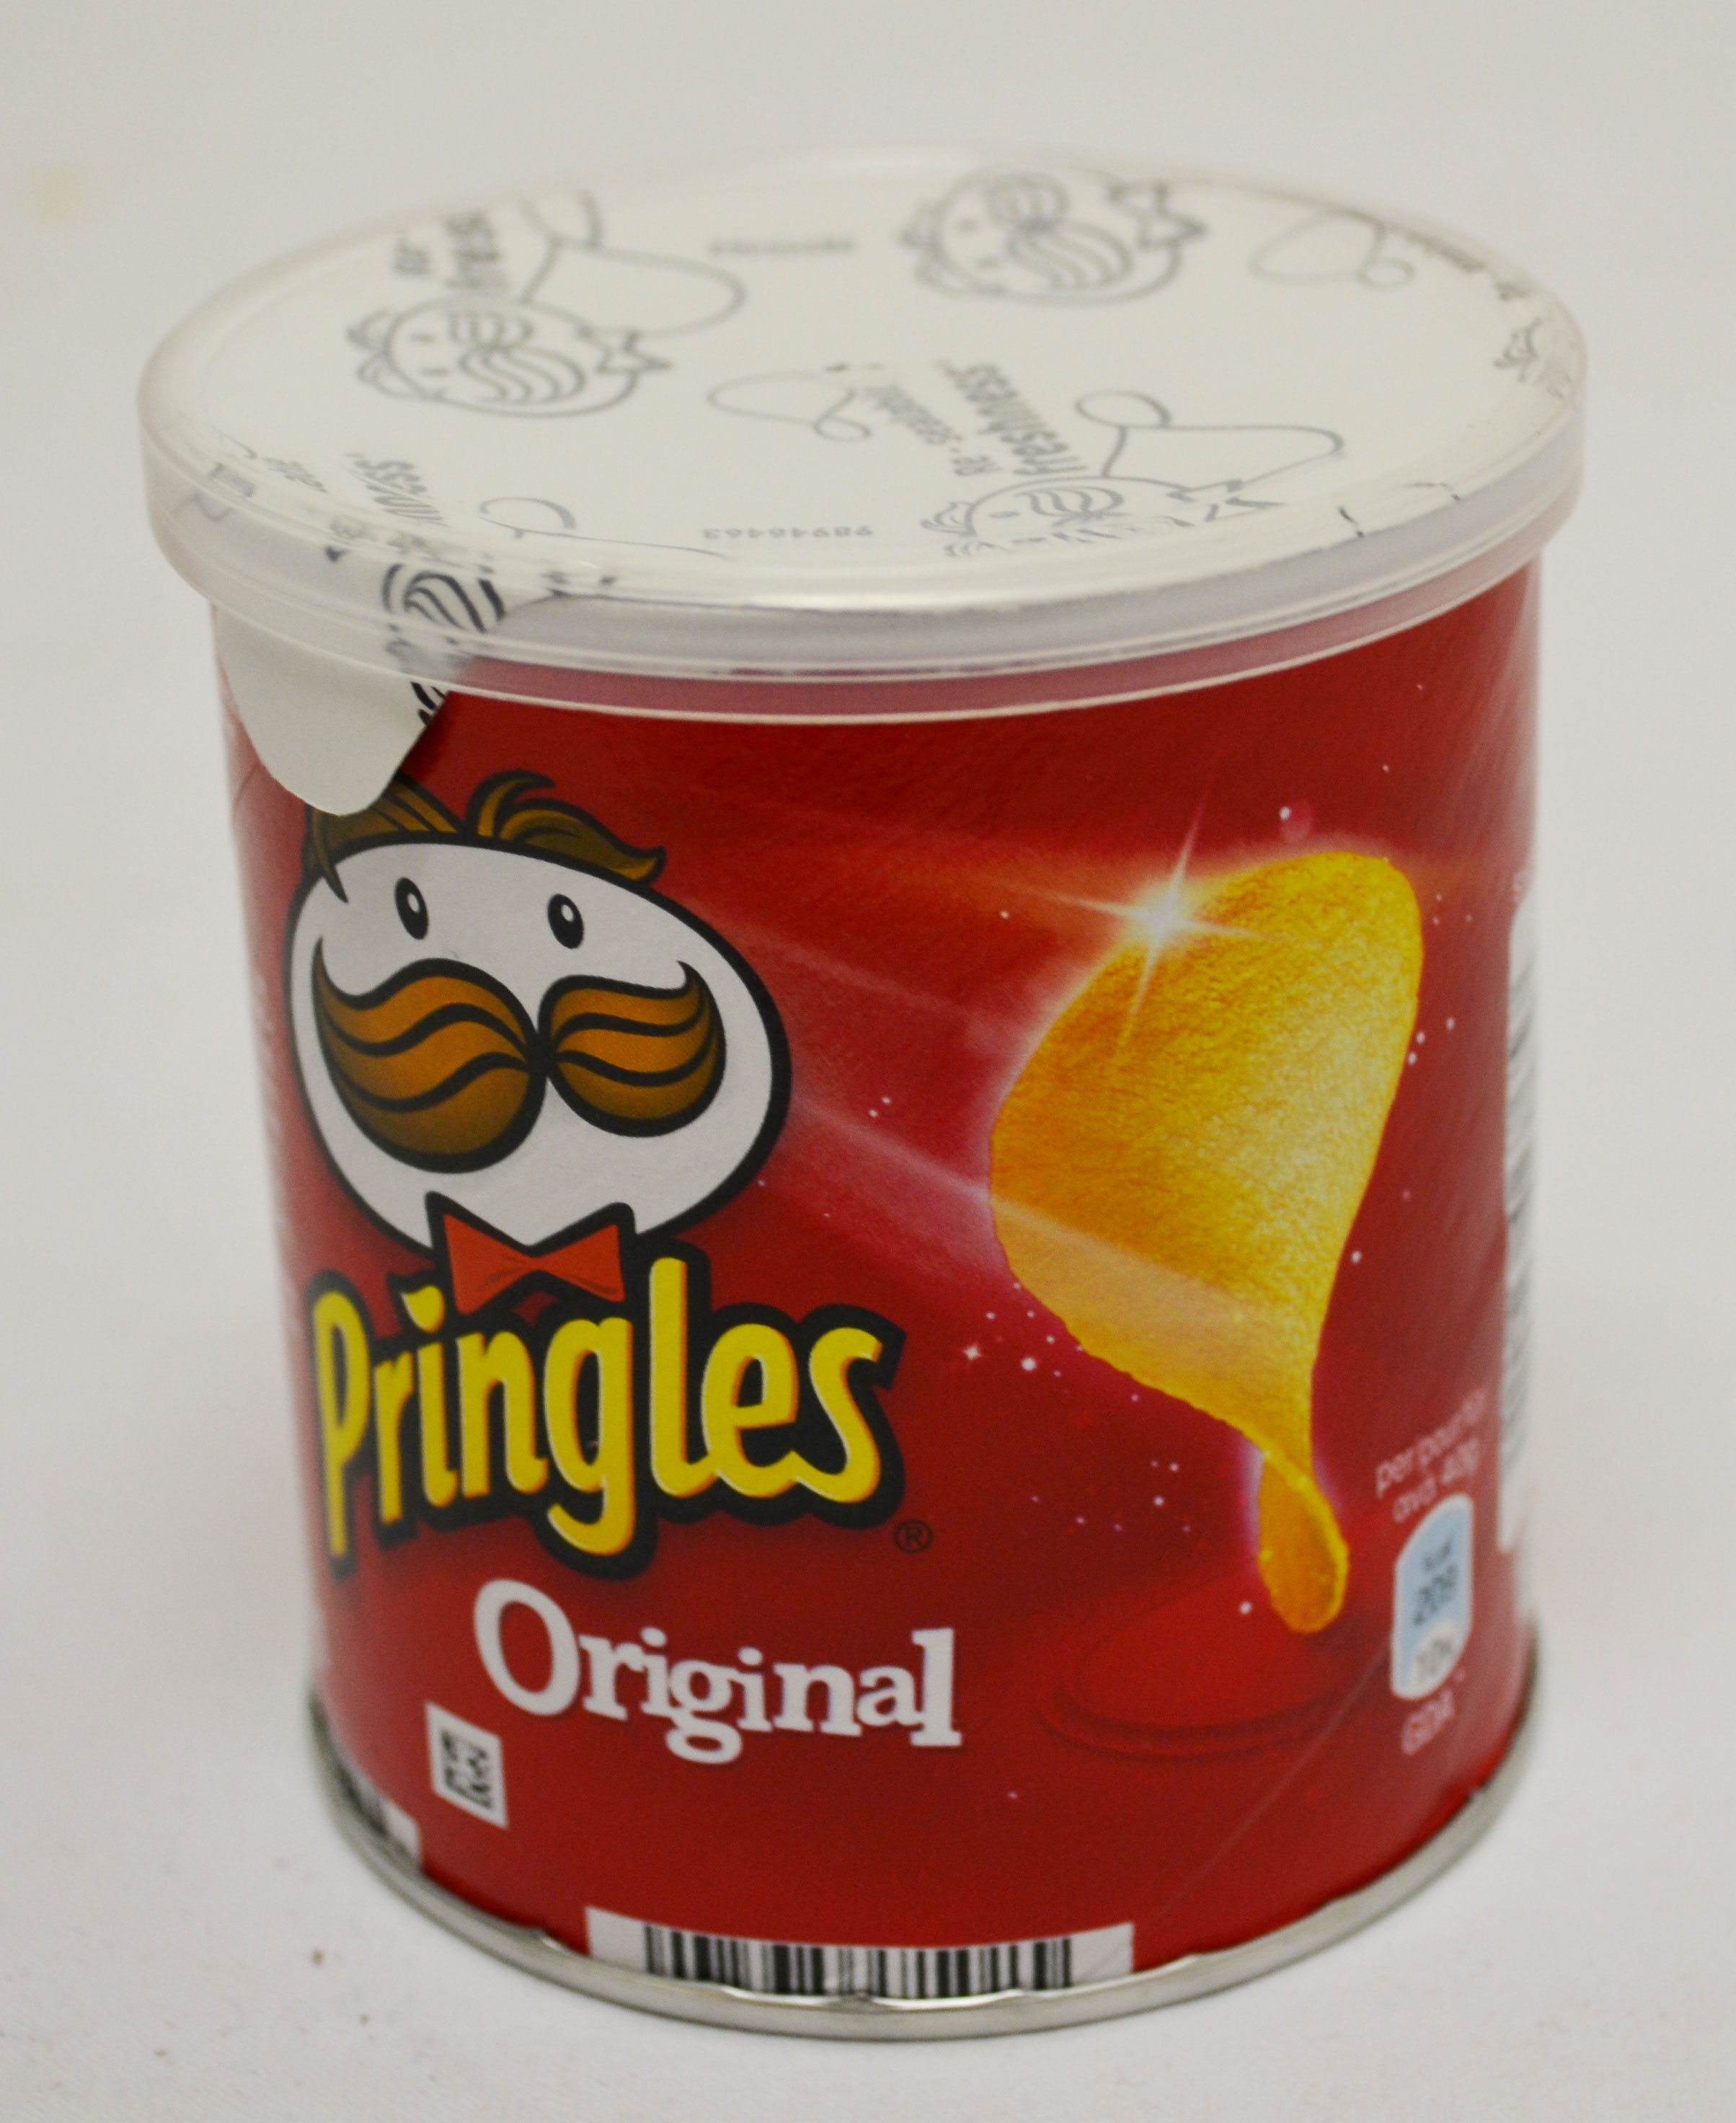 Pringles met label